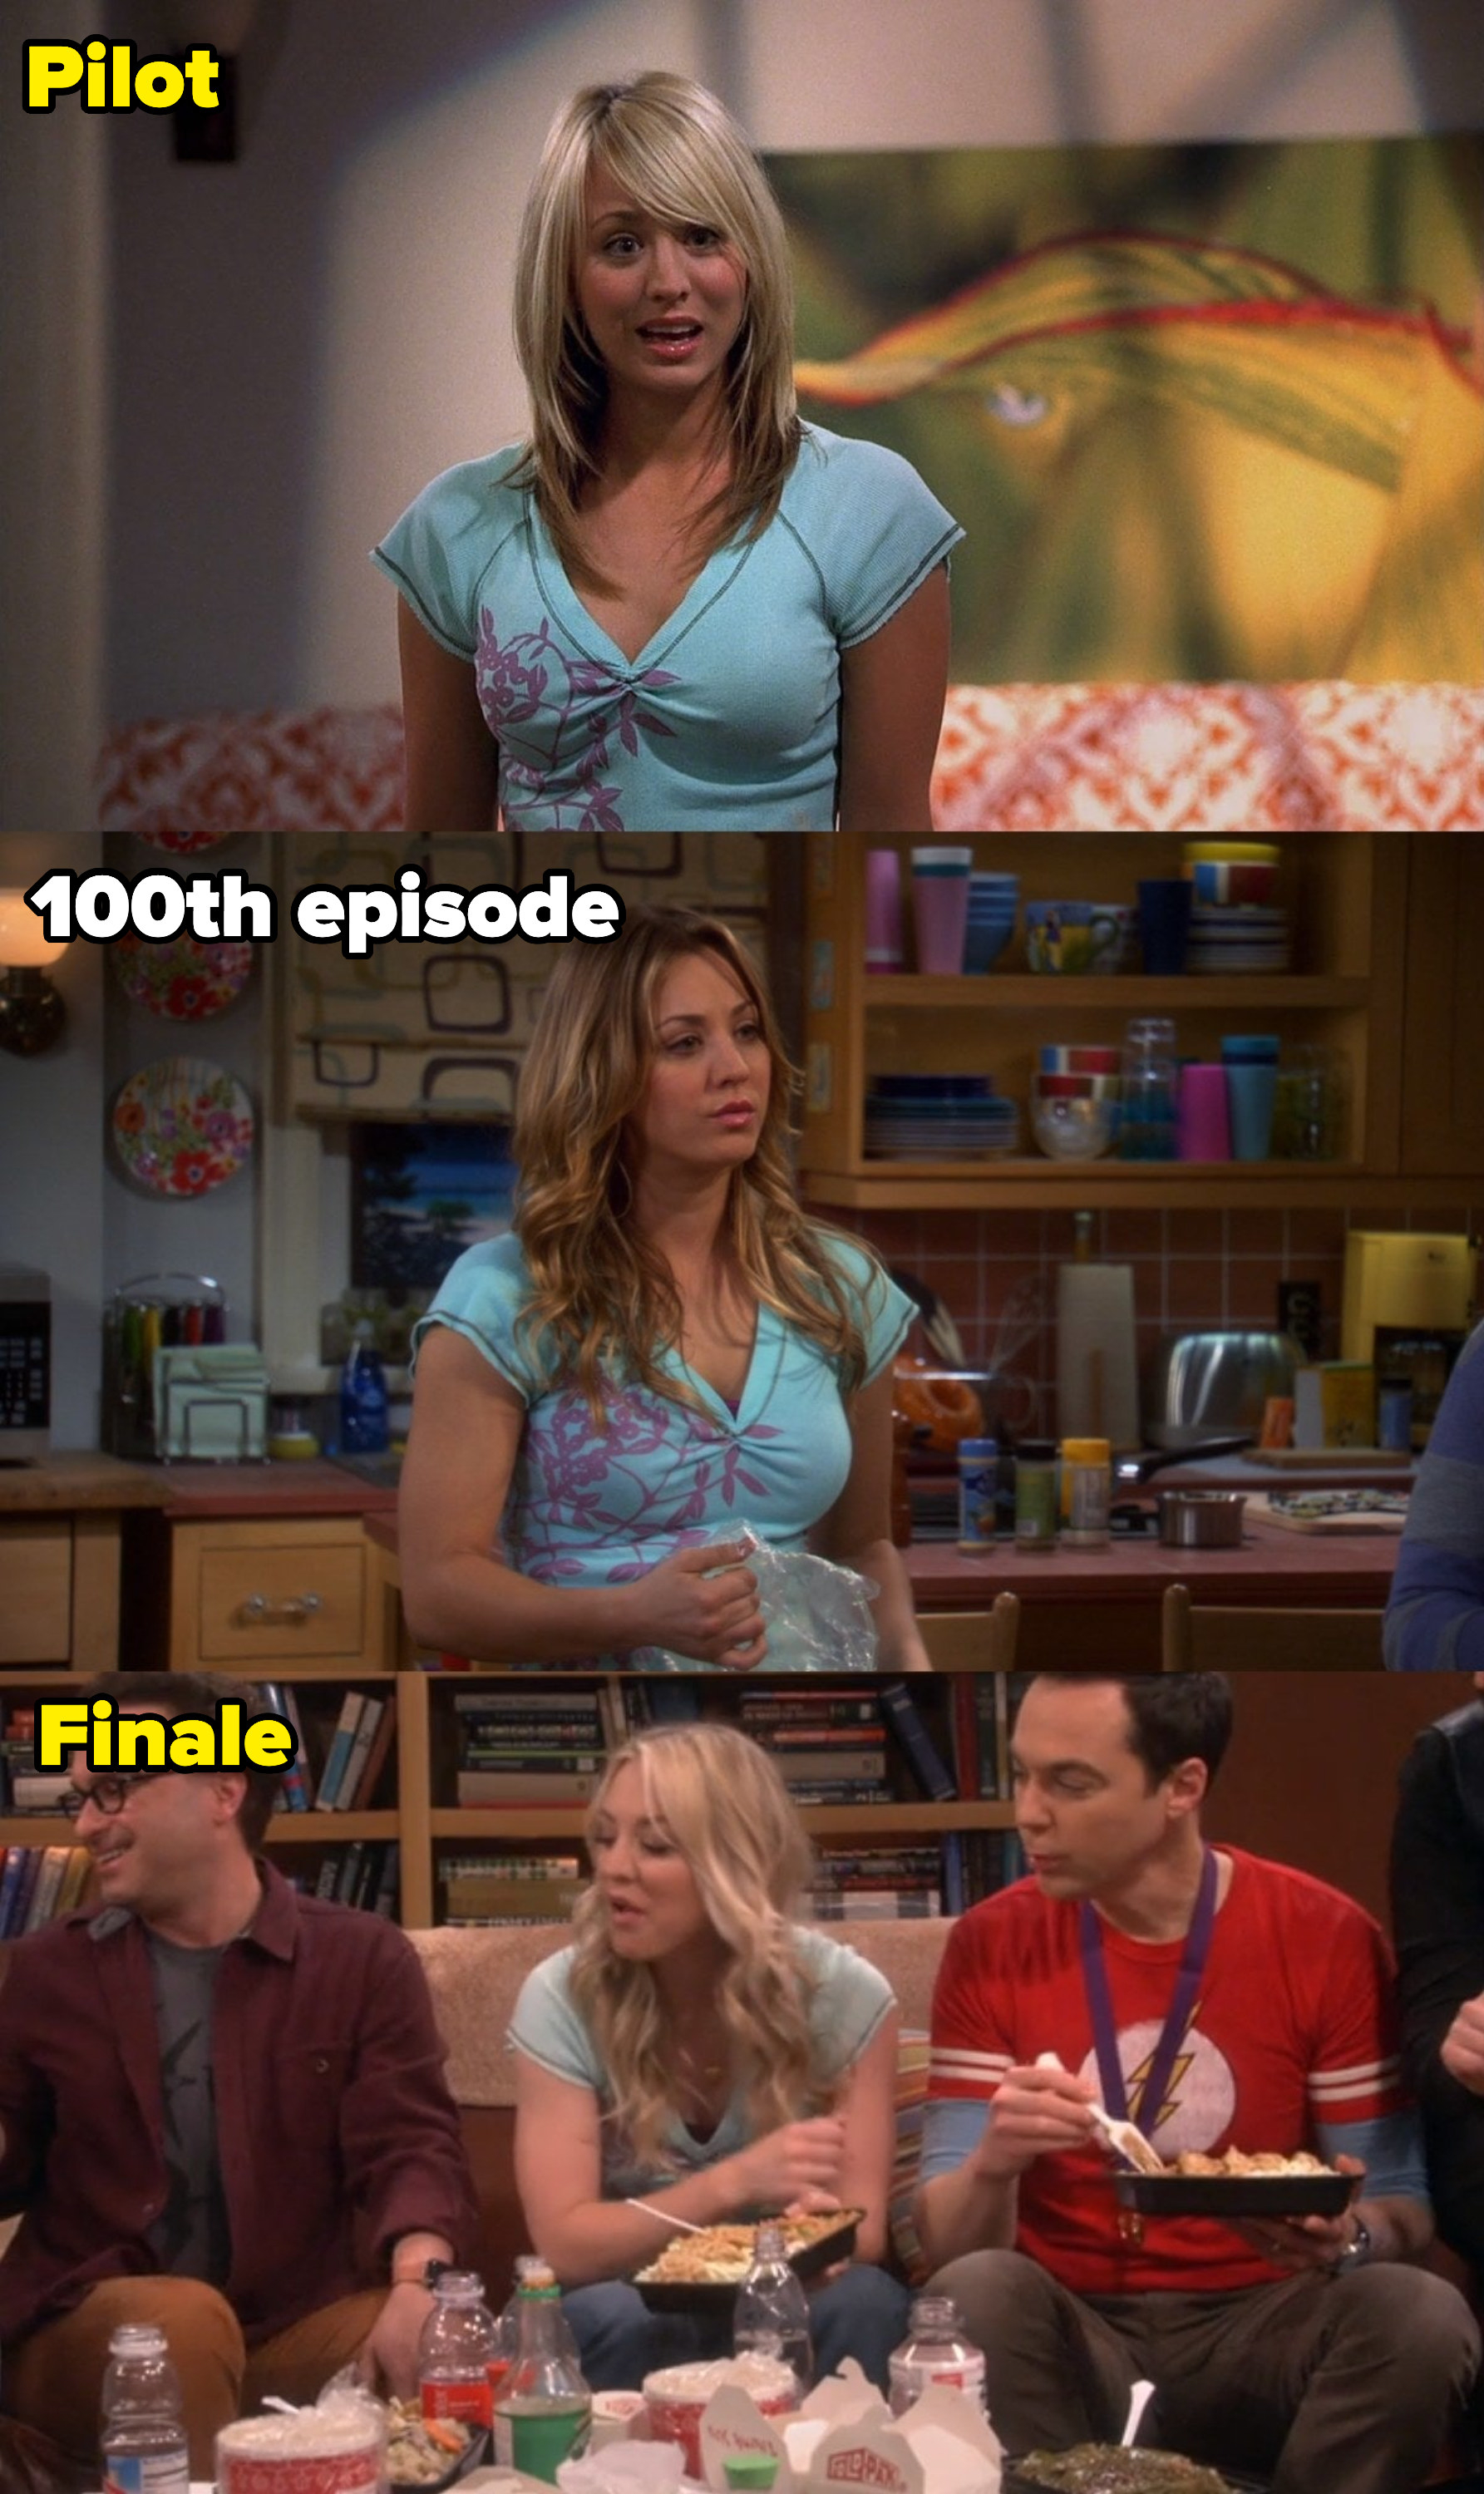 Penny wearing the same shirt over various Big Bang Theory episodes